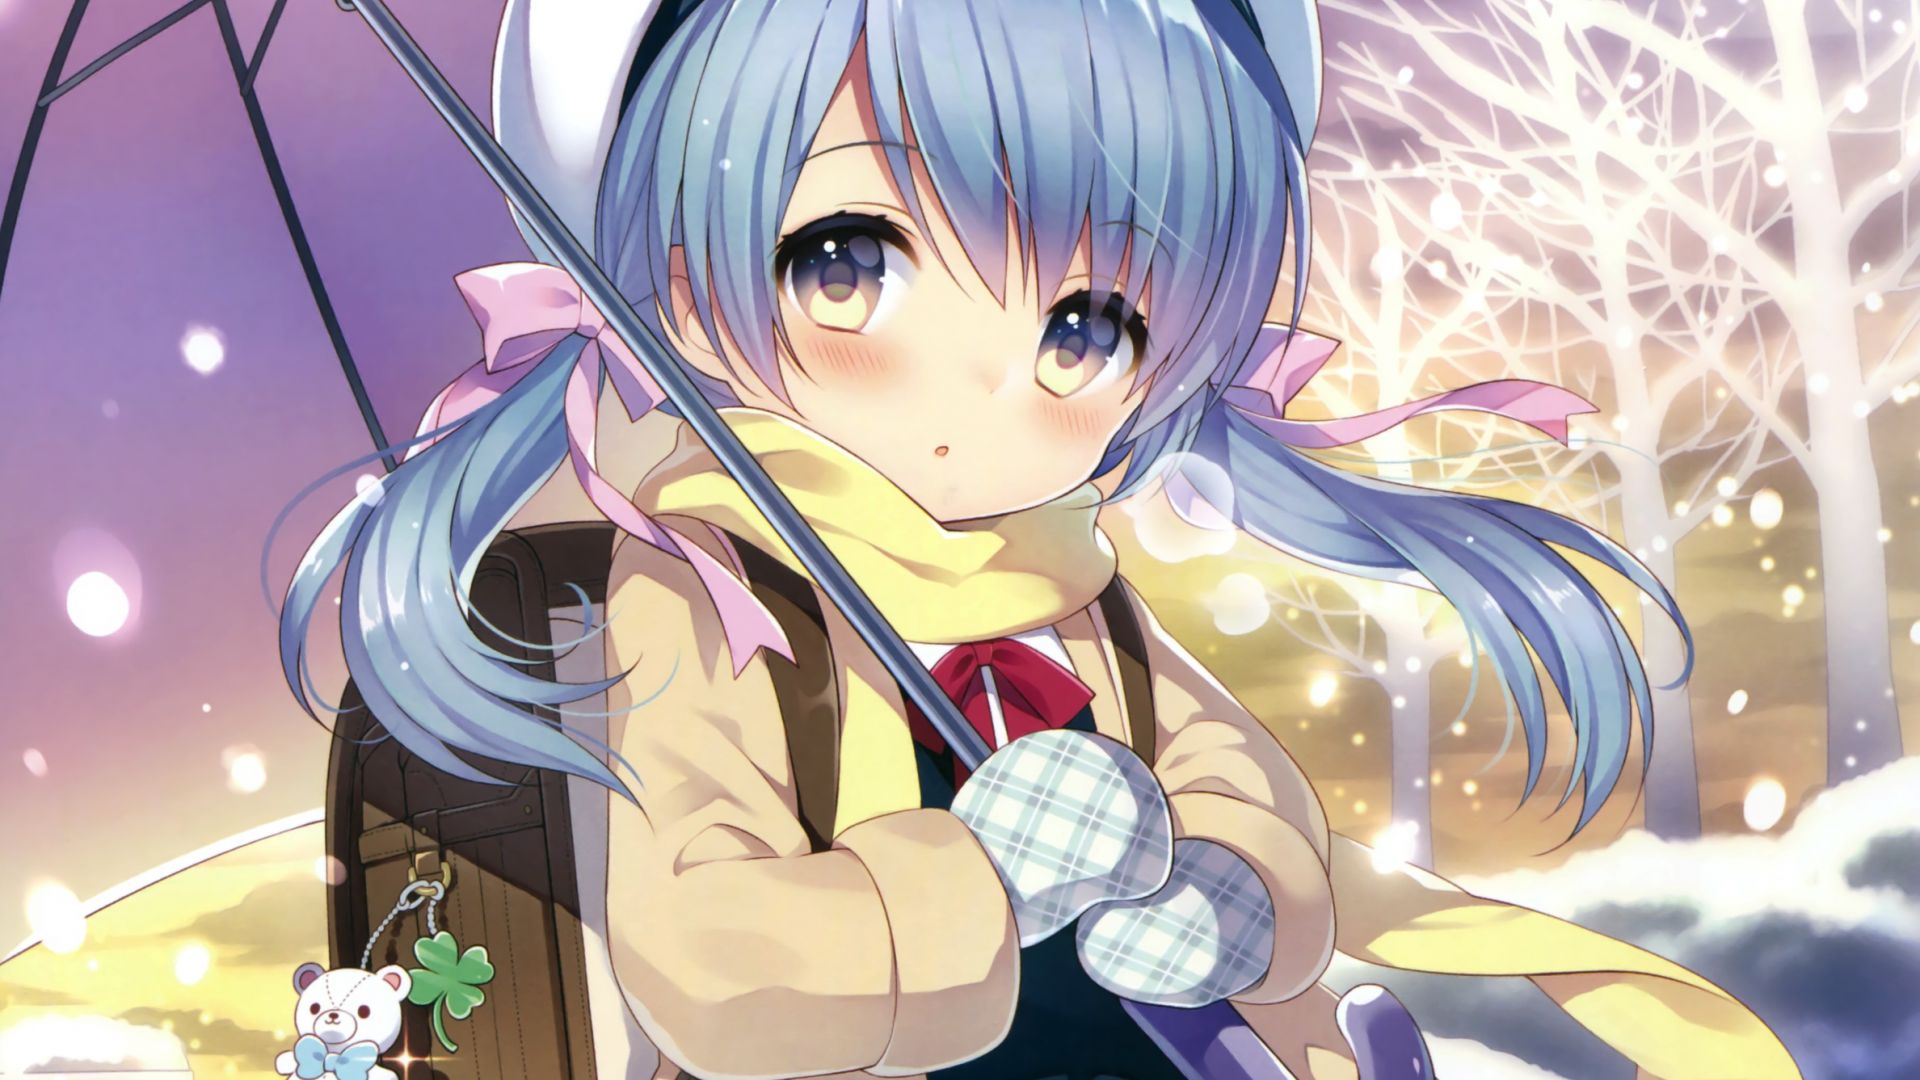 Wallpaper Winter, cute anime girl, umbrella